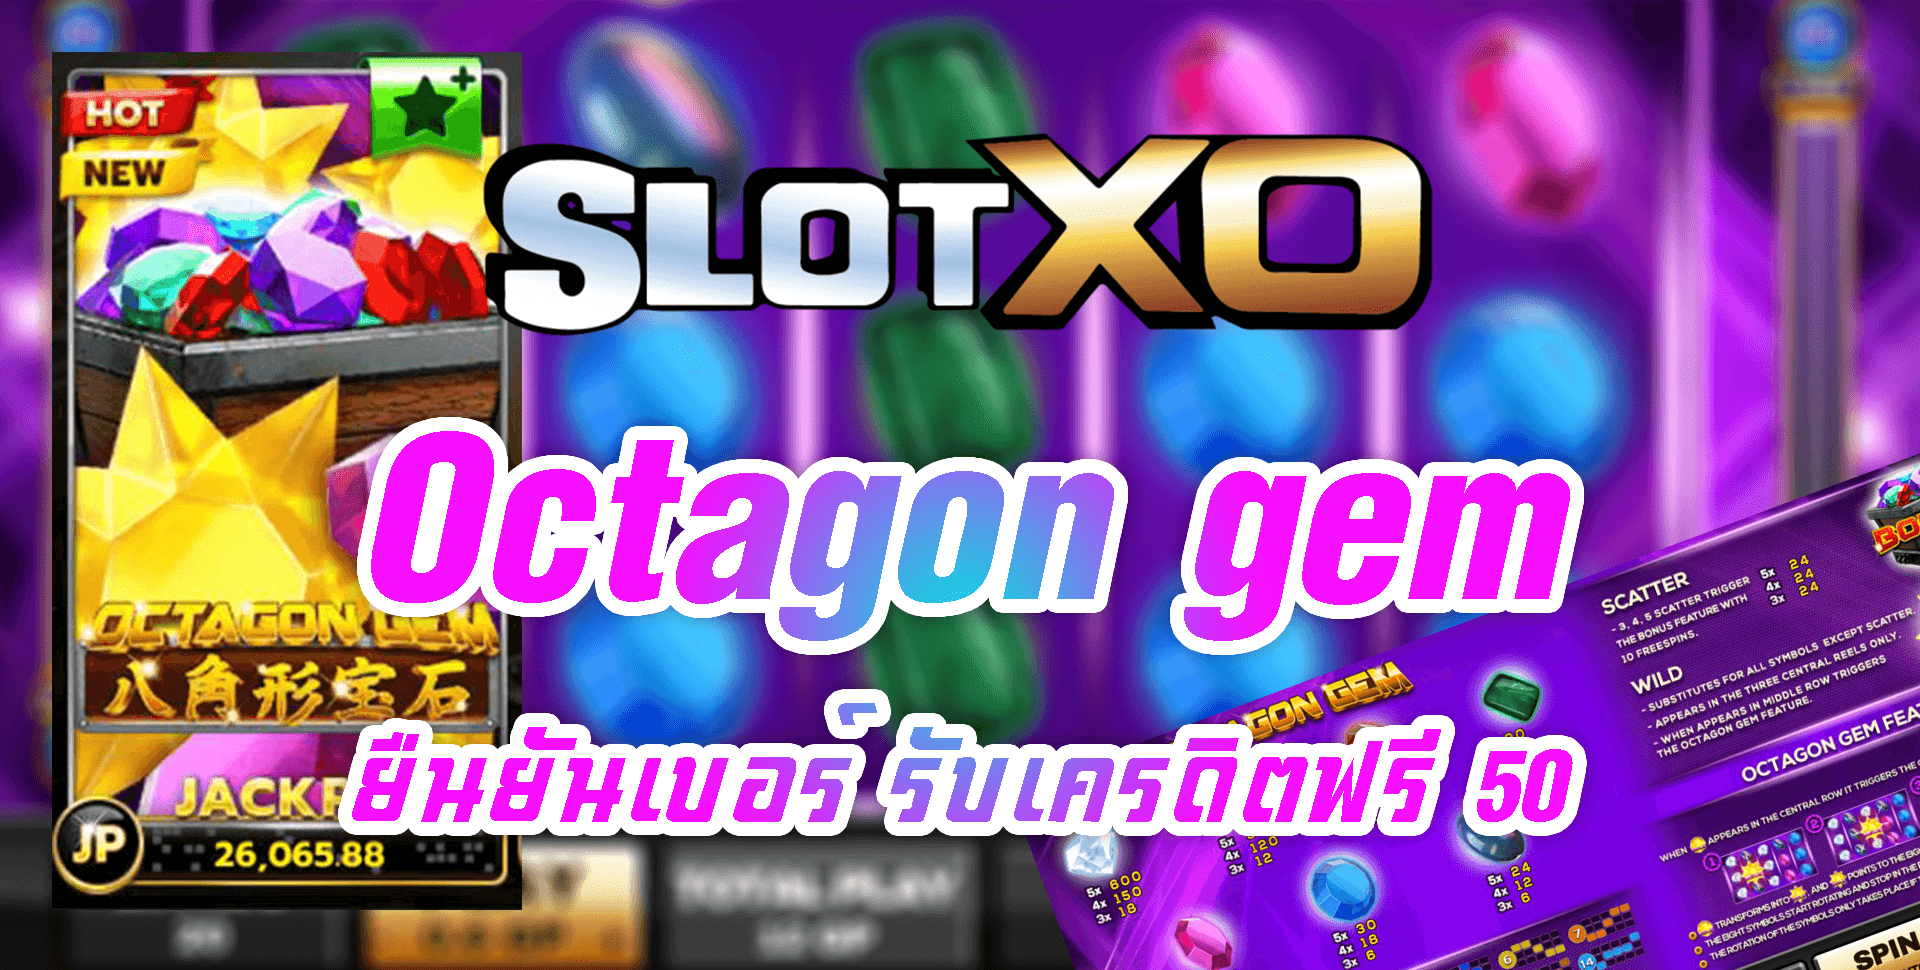 Slot xo-Octagon-gem-5